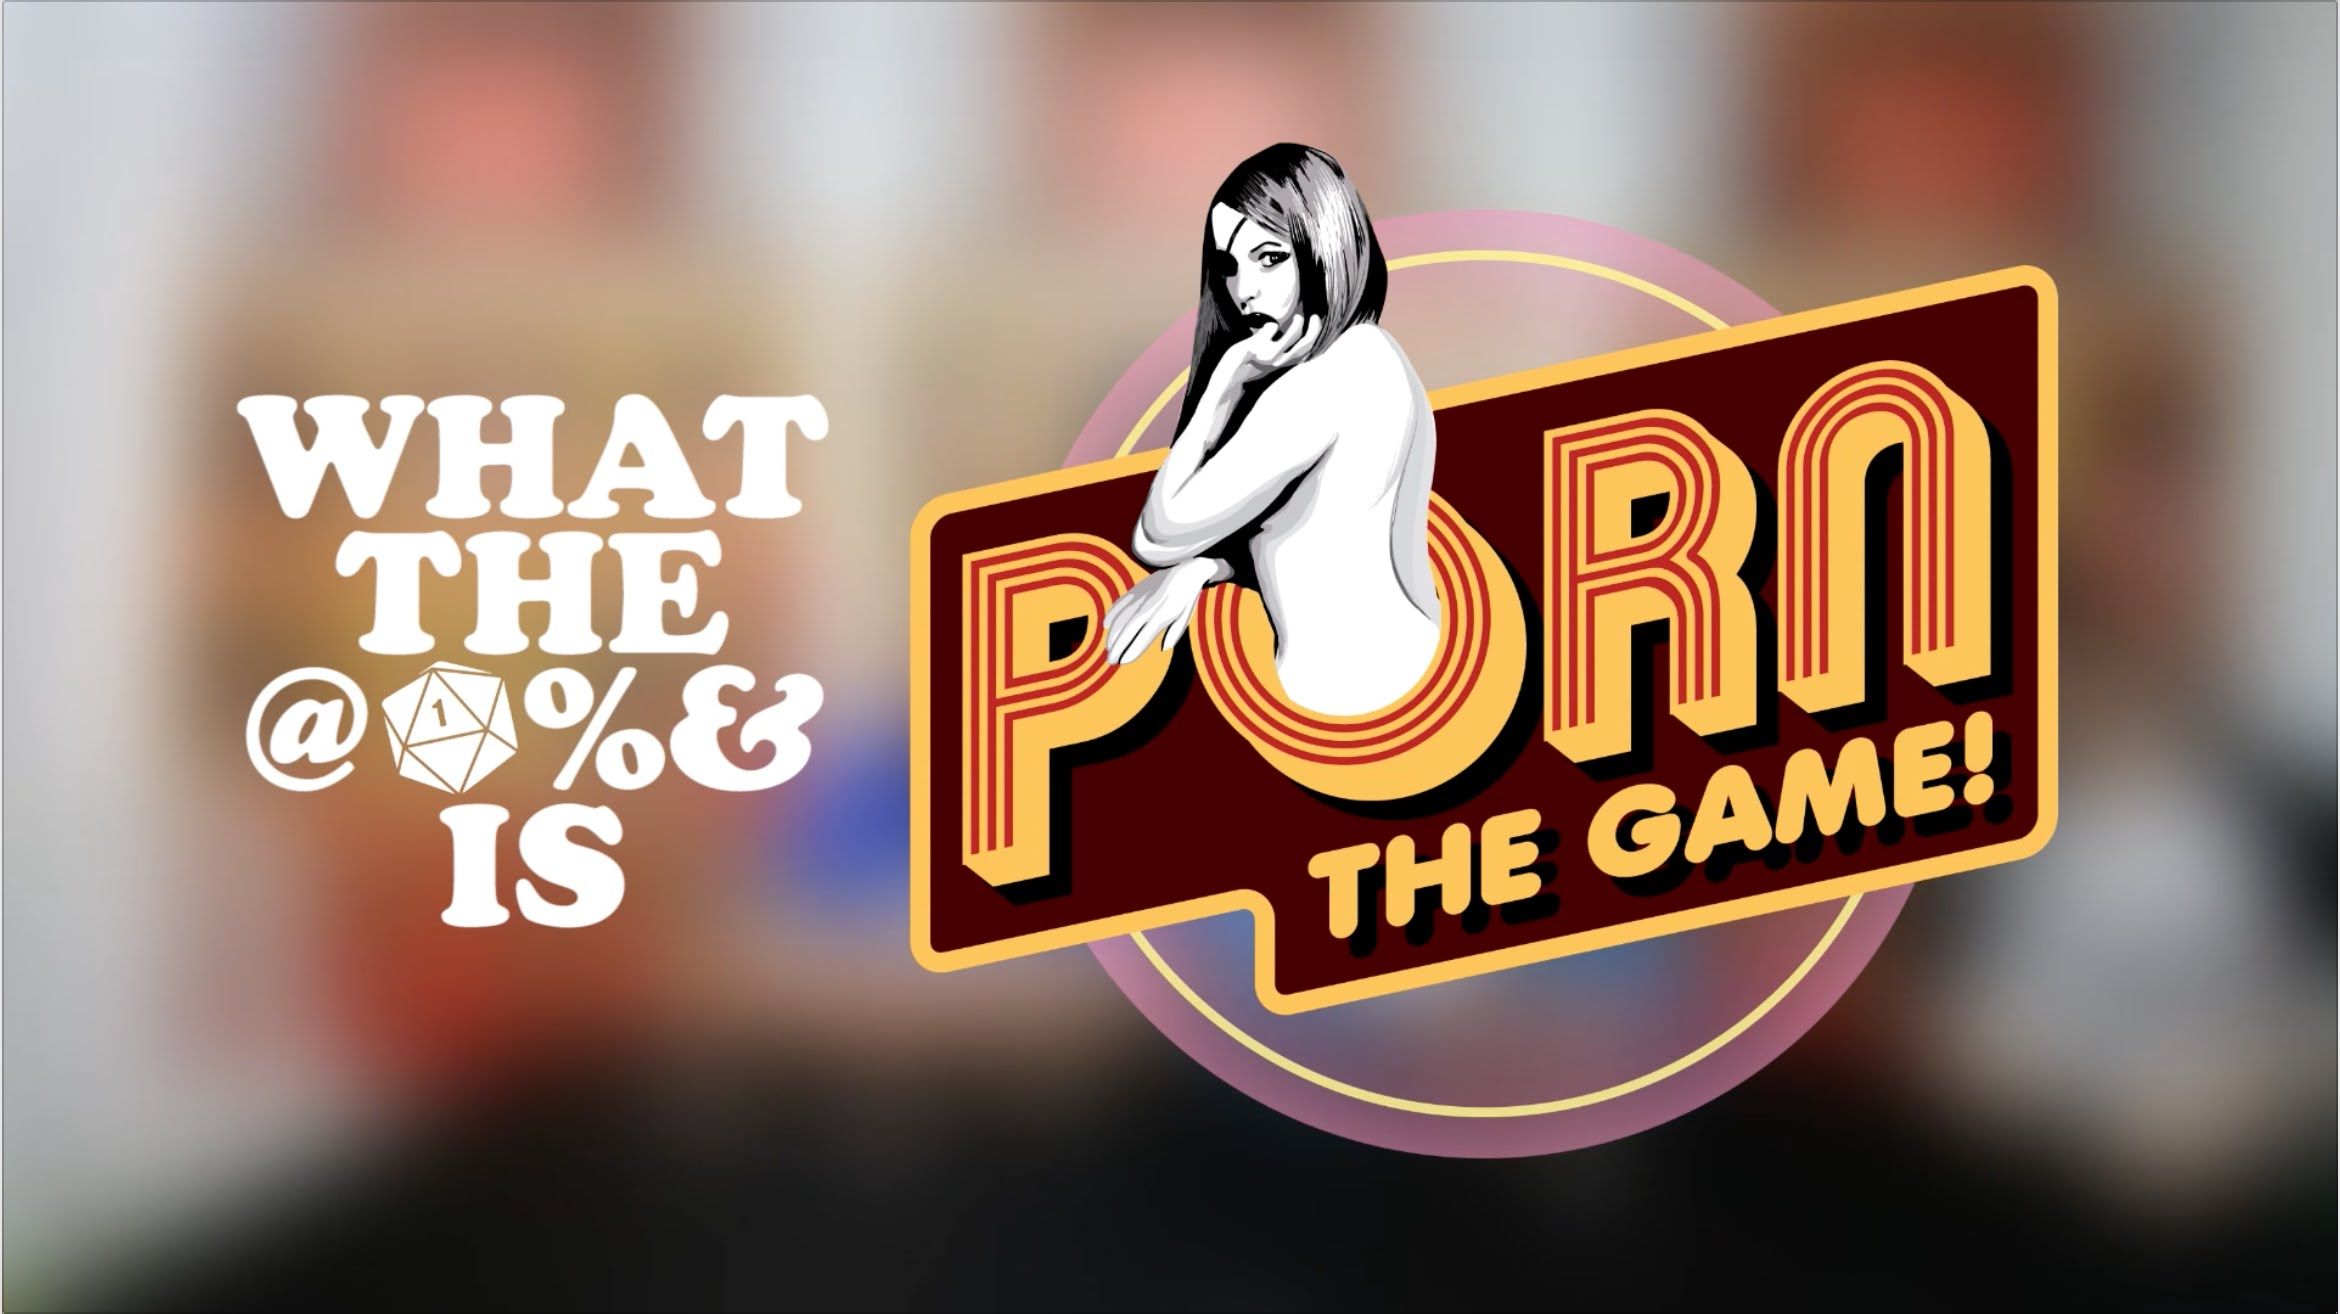 Porn: The Game! Simple. Raunchy. Fun